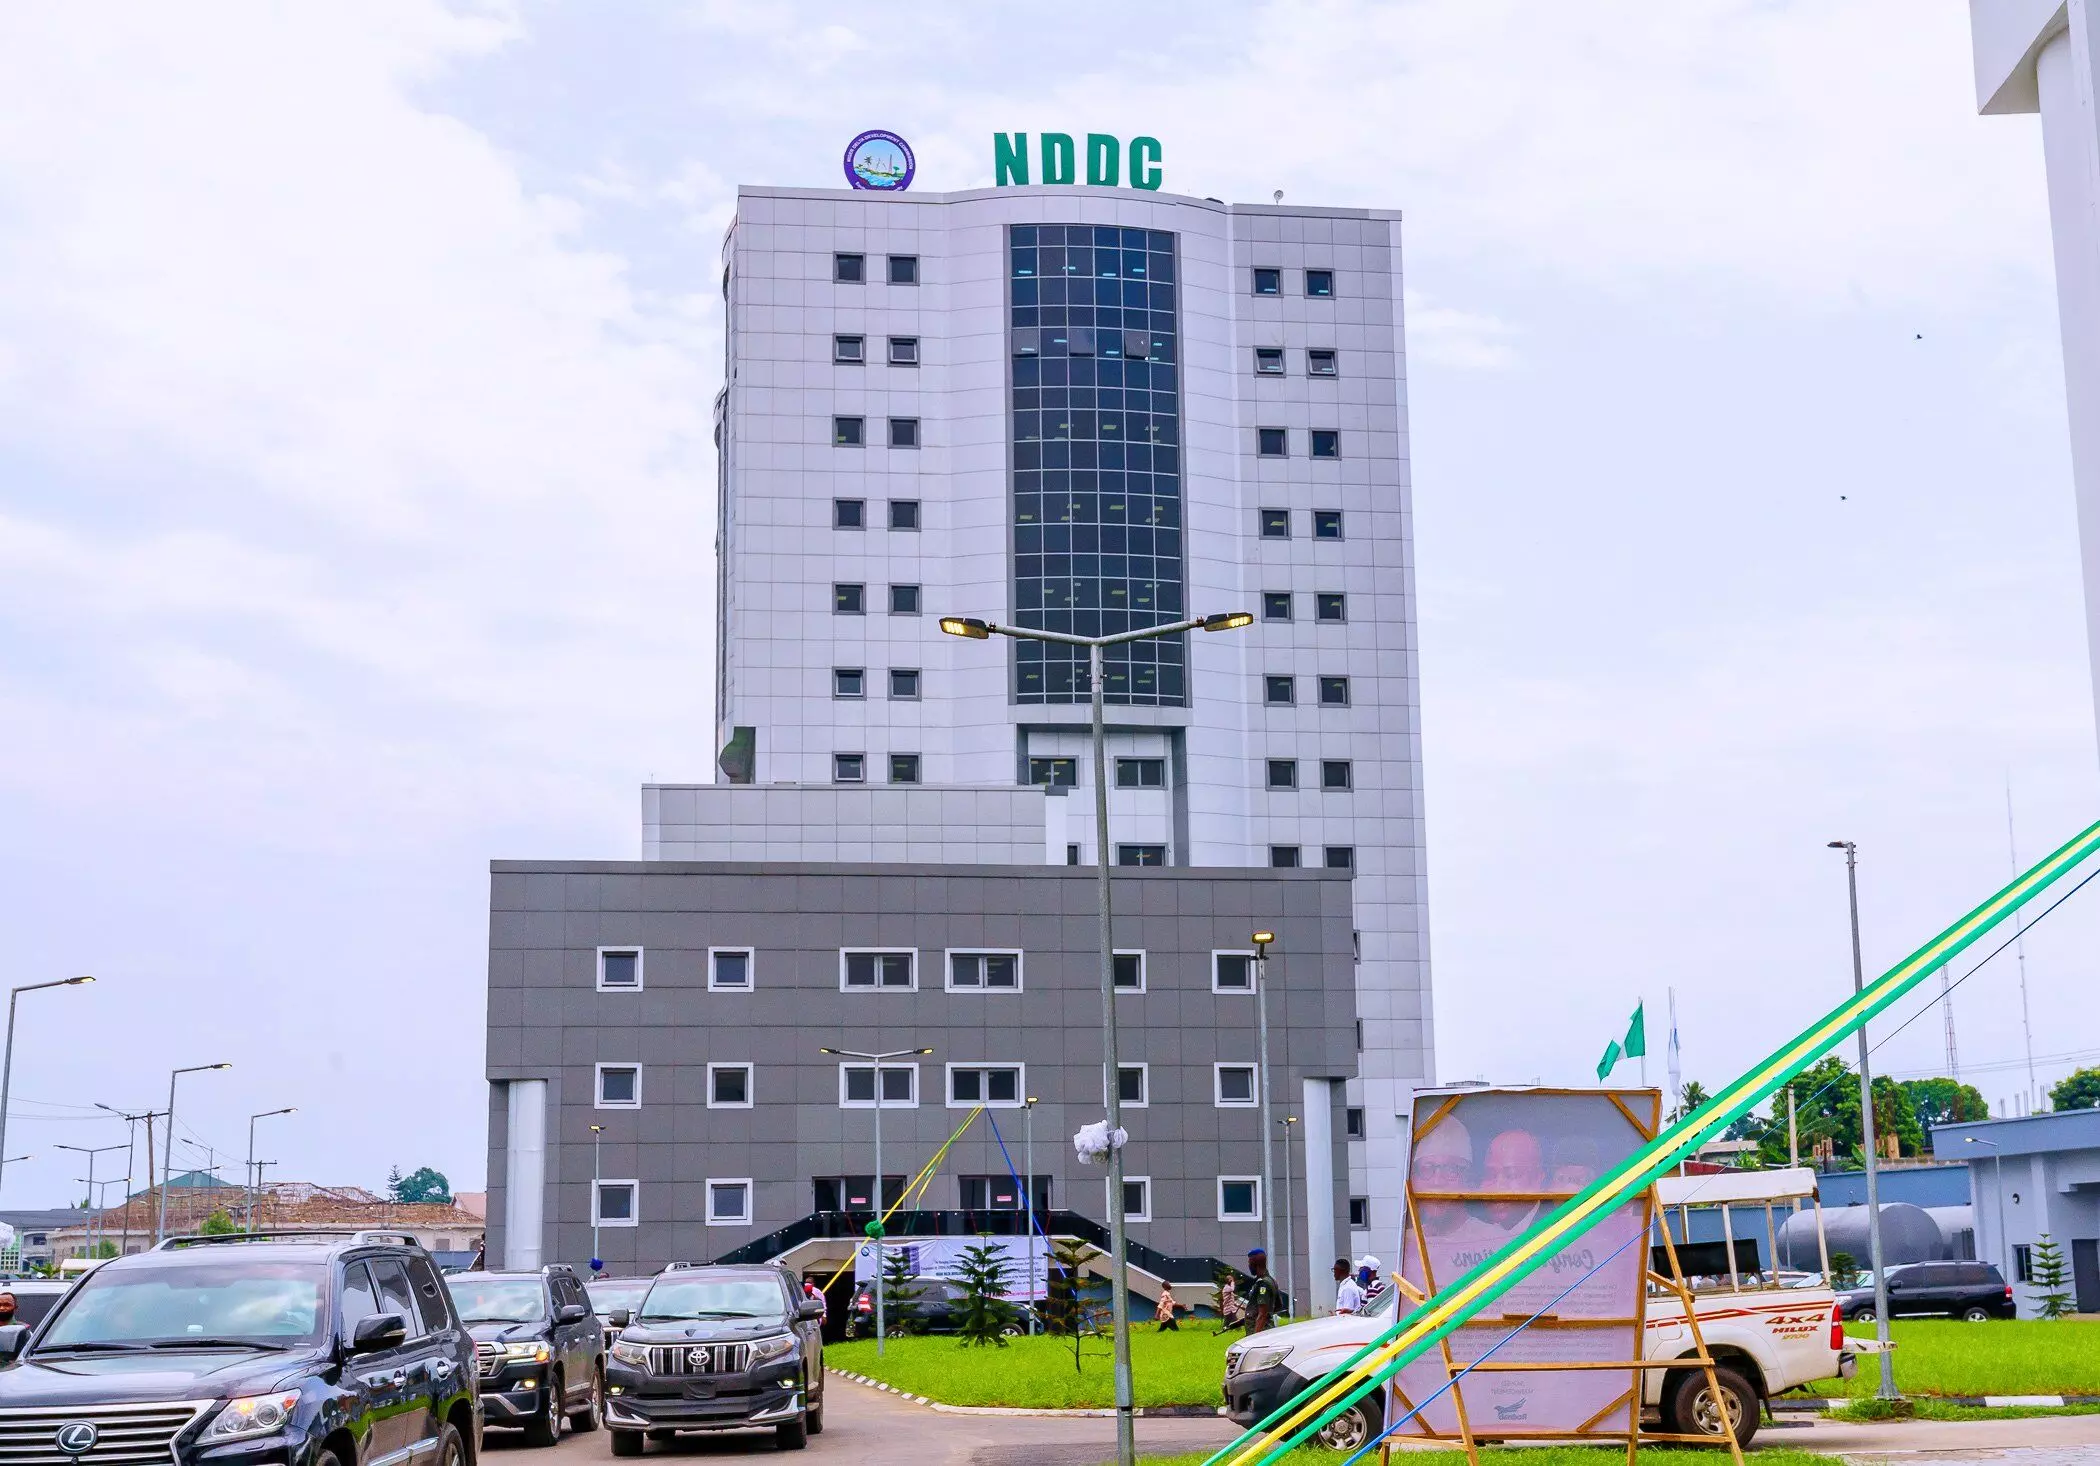 NDDC to invest in Nigerian universities